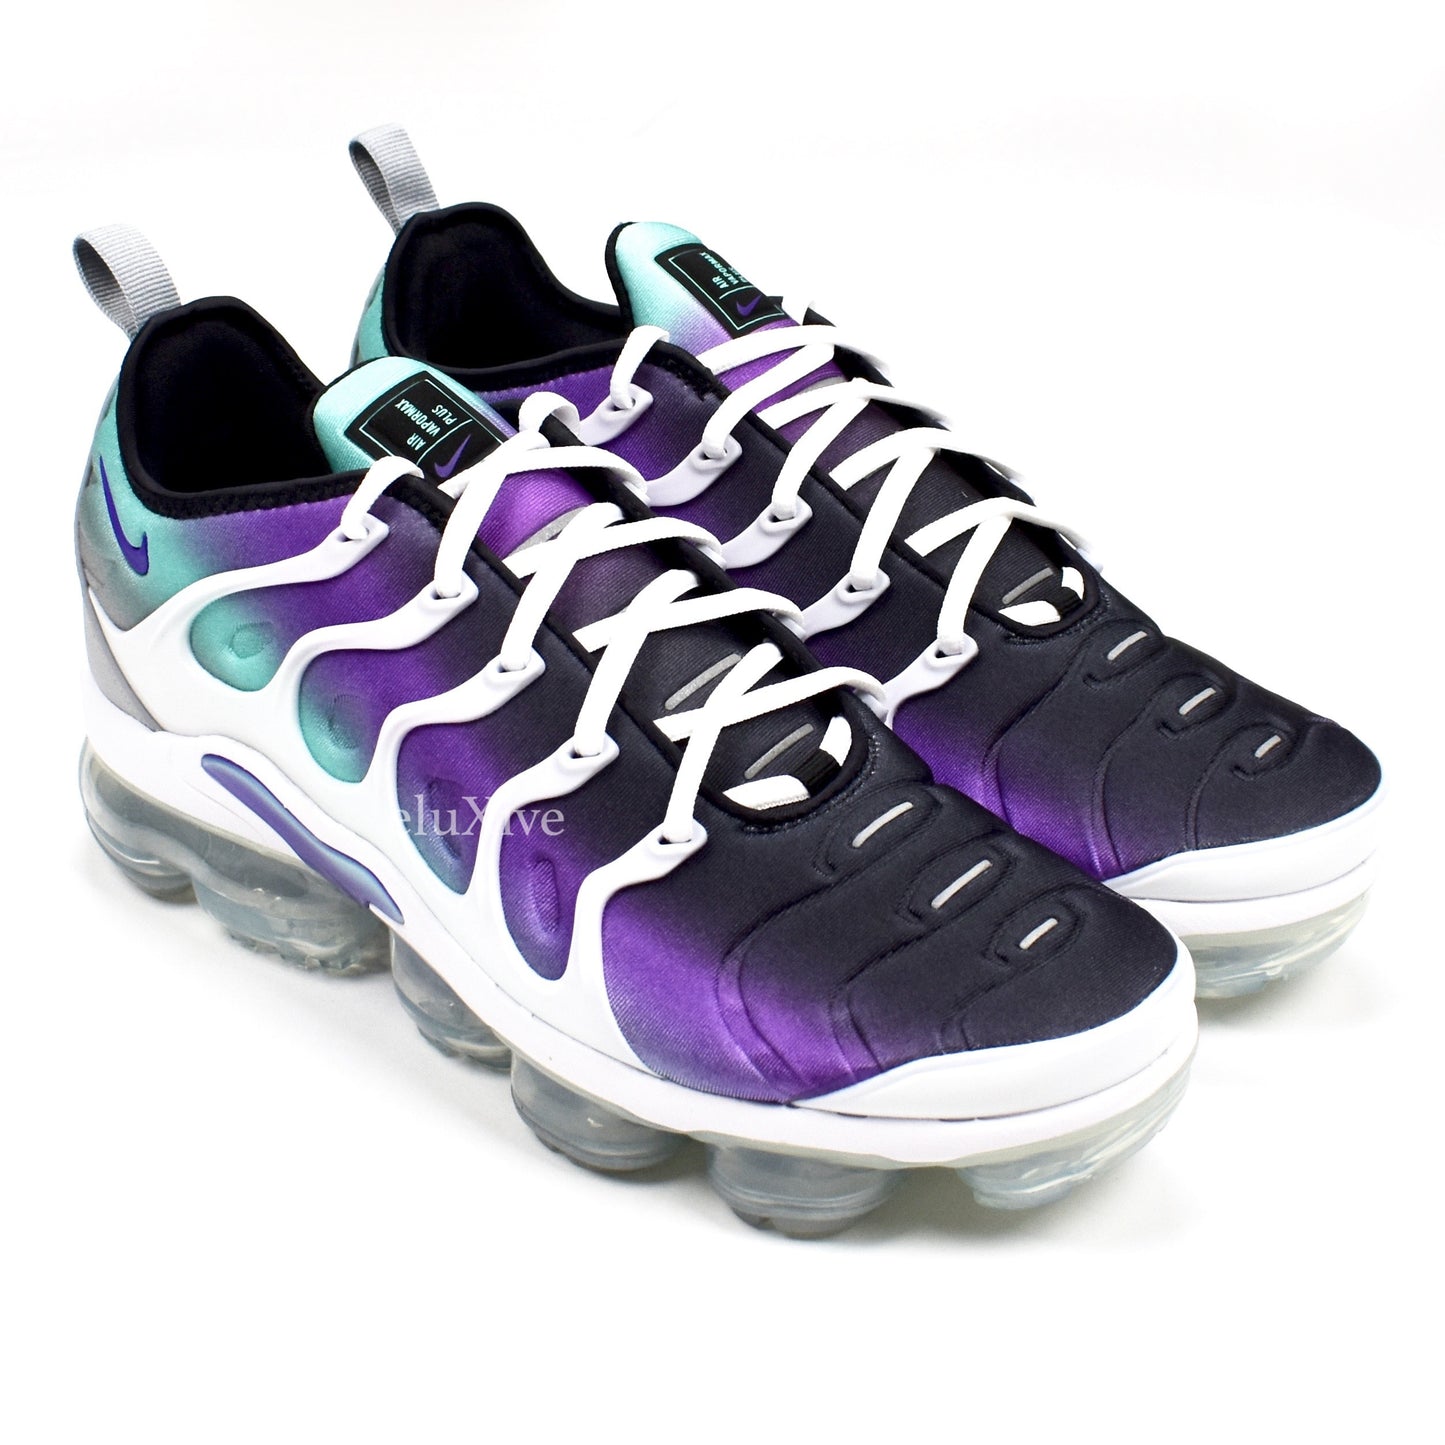 Nike - Air Vapormax Plus 'Grape' (White/Fierce Purple)